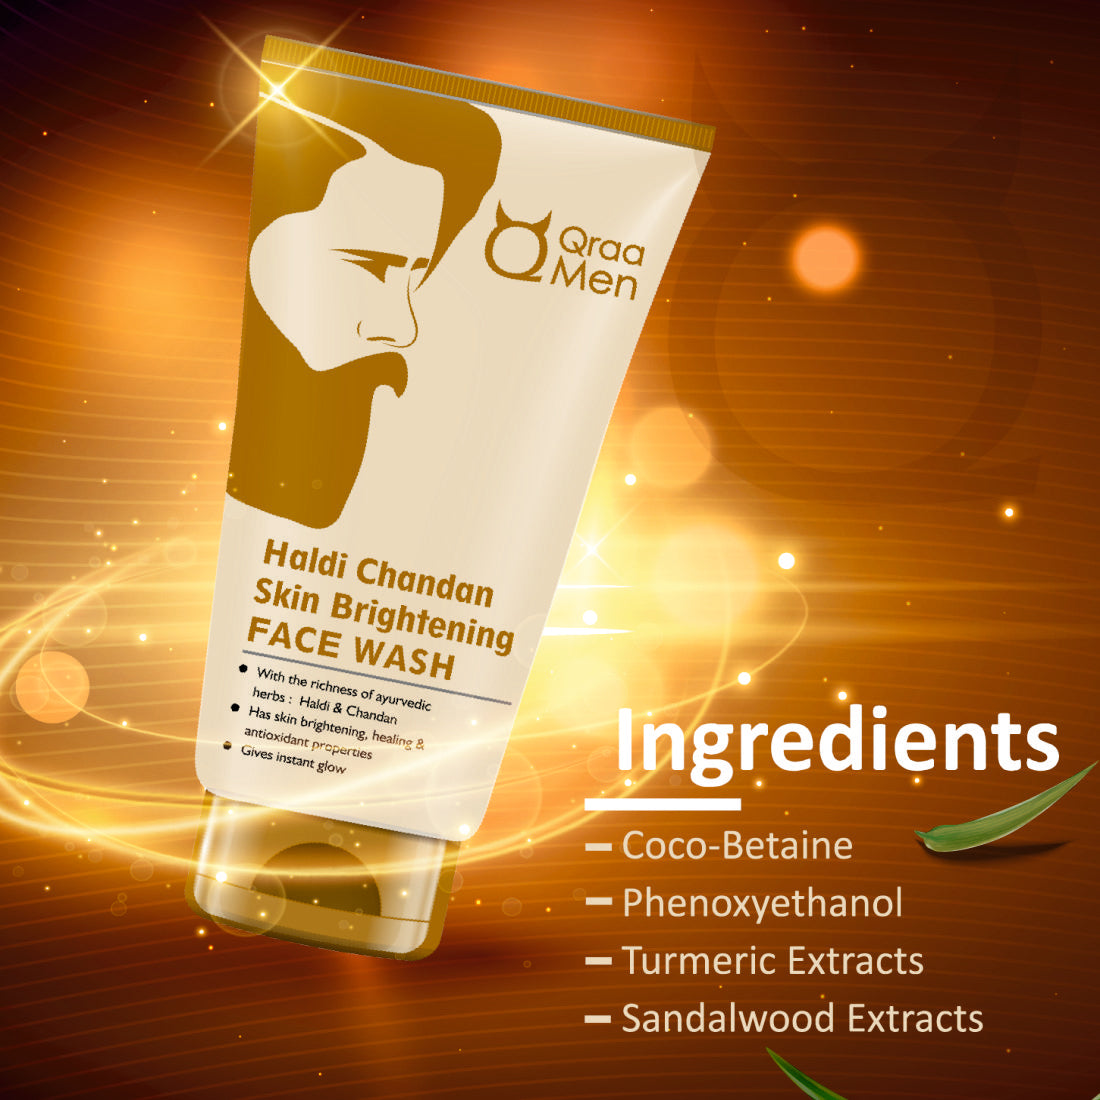 Haldi Chandan Skin Brightening Face Wash, With Turmeric Oil